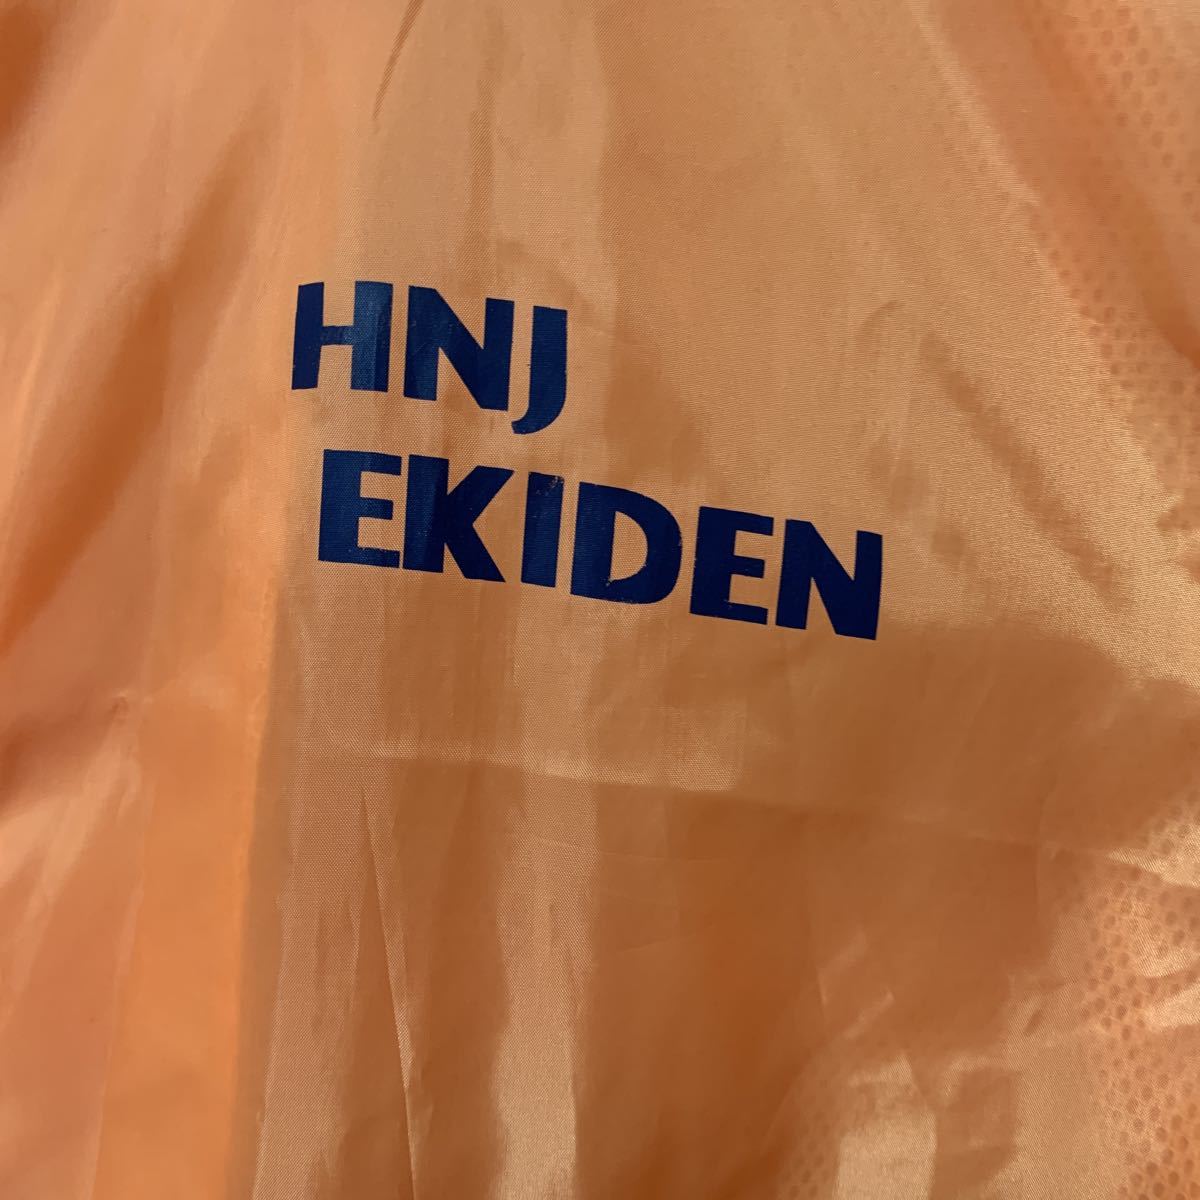 HNJ EKIDEN 駅伝 オレンジ ナイロンジャケット ウィンドブレーカー _画像3